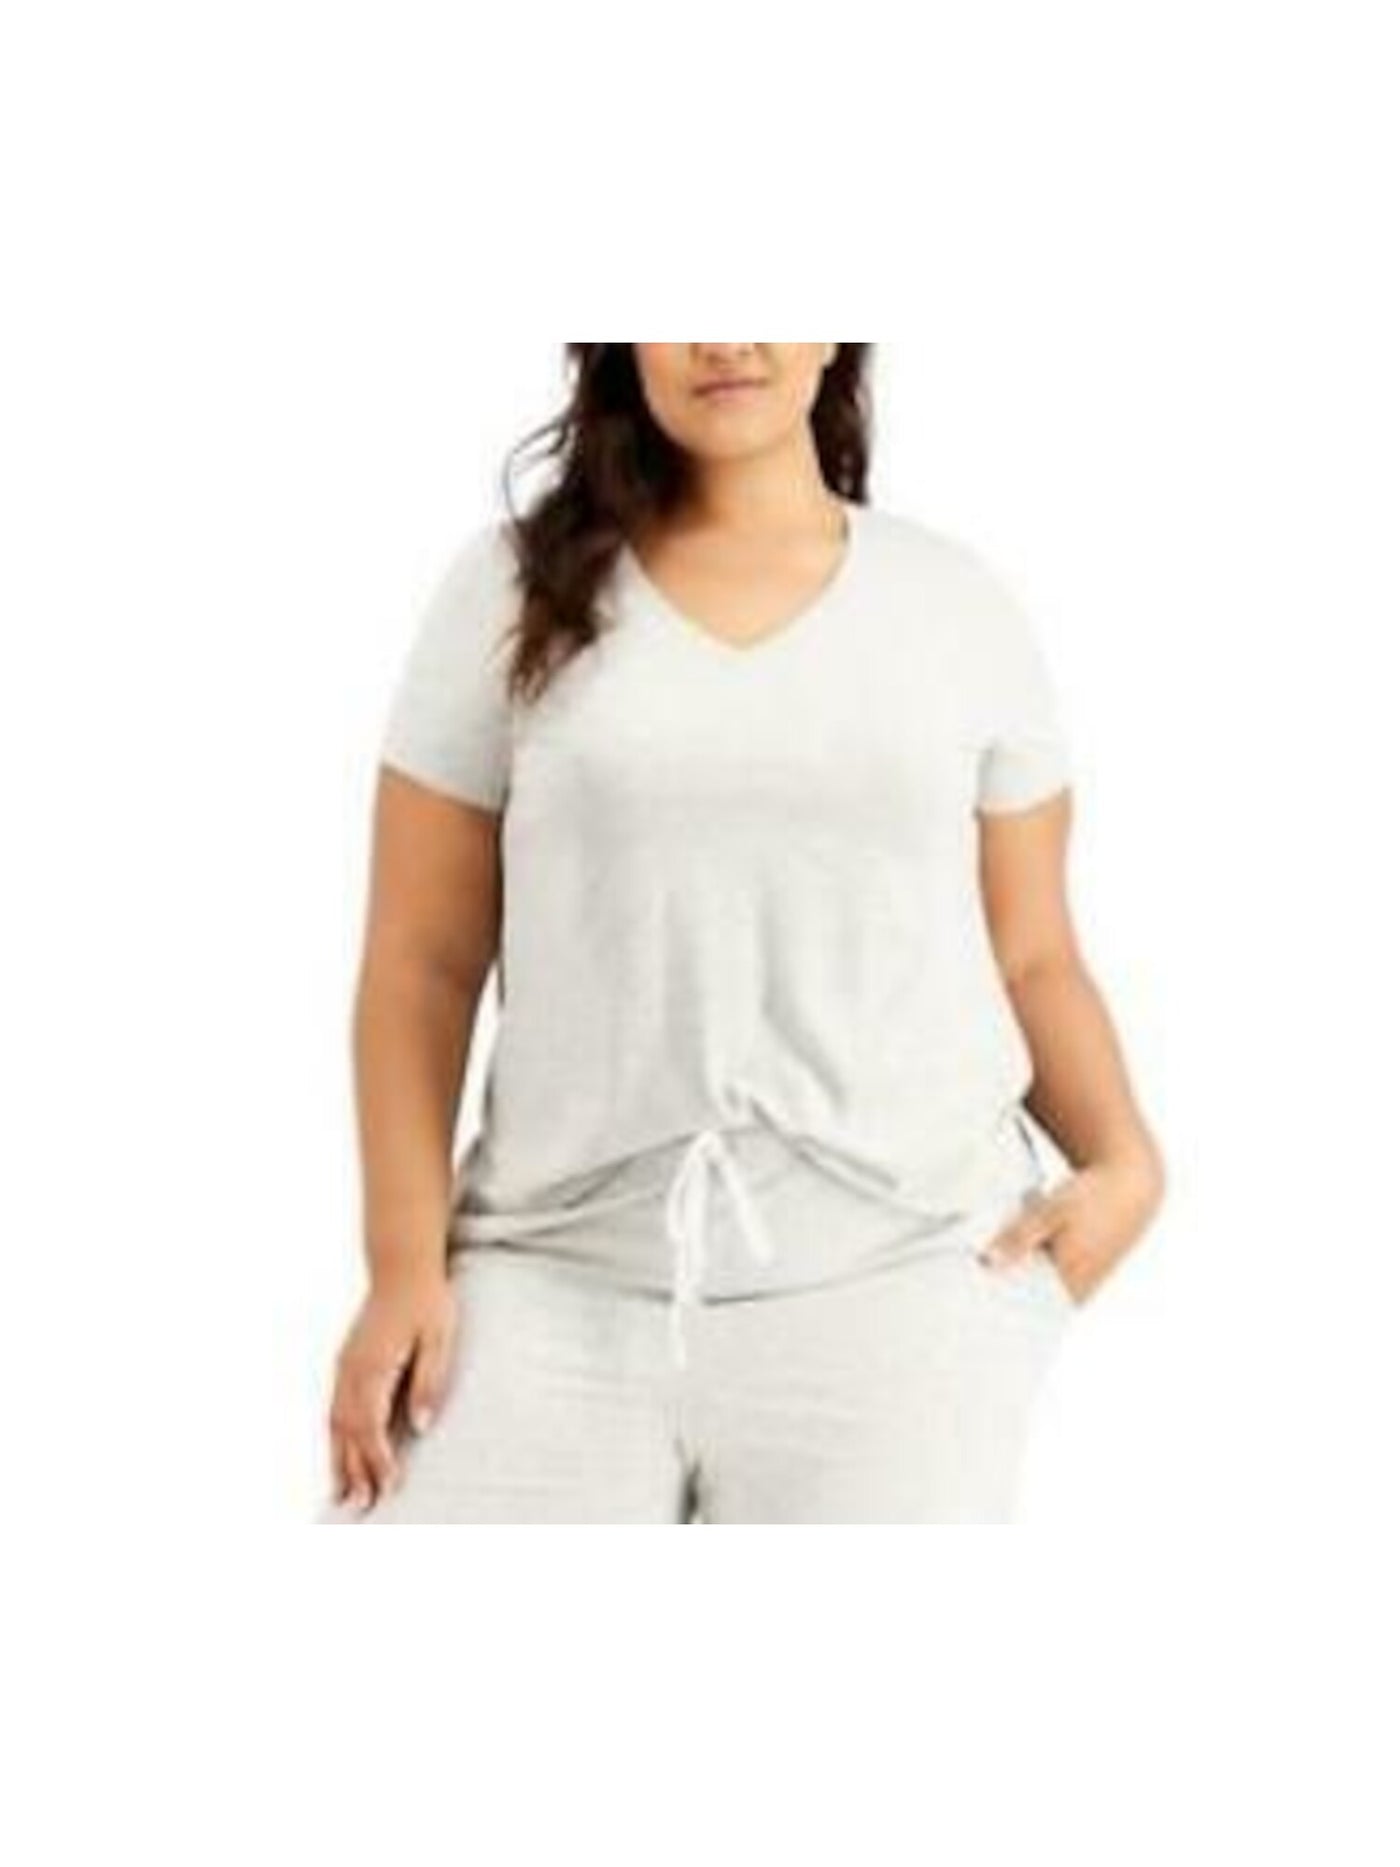 CHARTER CLUB Intimates Gray Knit Side Vent Hem Pull Over Style Sleep Shirt Pajama Top Plus 1X